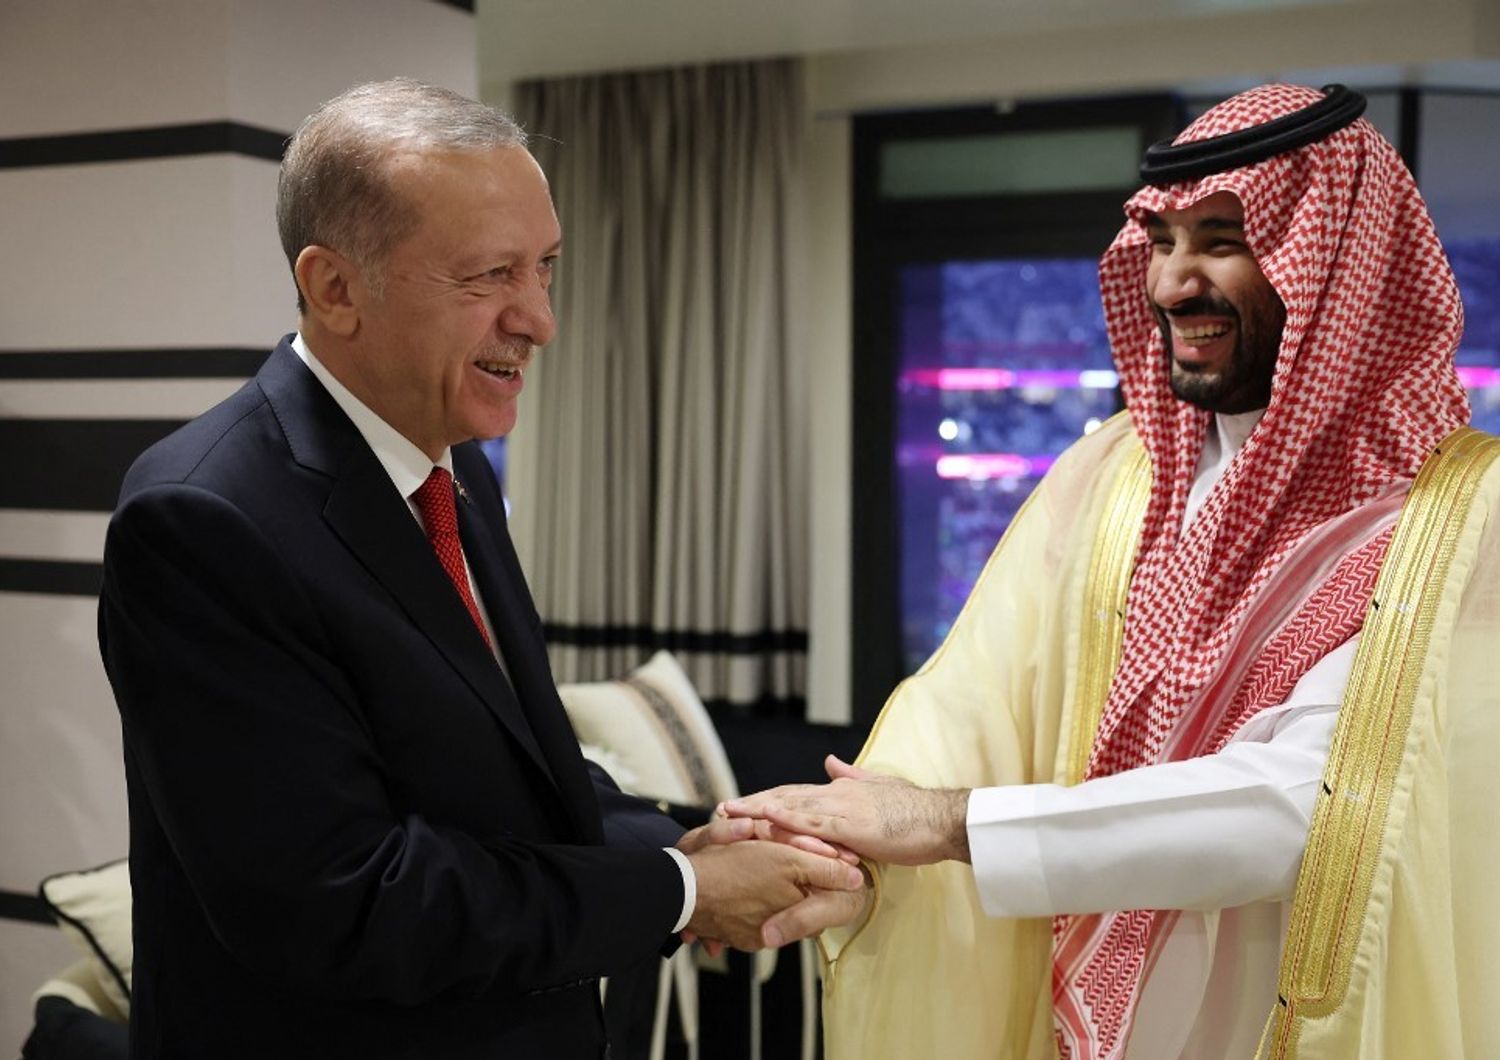 Il presidente turco Recep Tayyip Erdogan e il principe ereditario dell'Arabia Saudita Mohammed bin Salman Al Saud